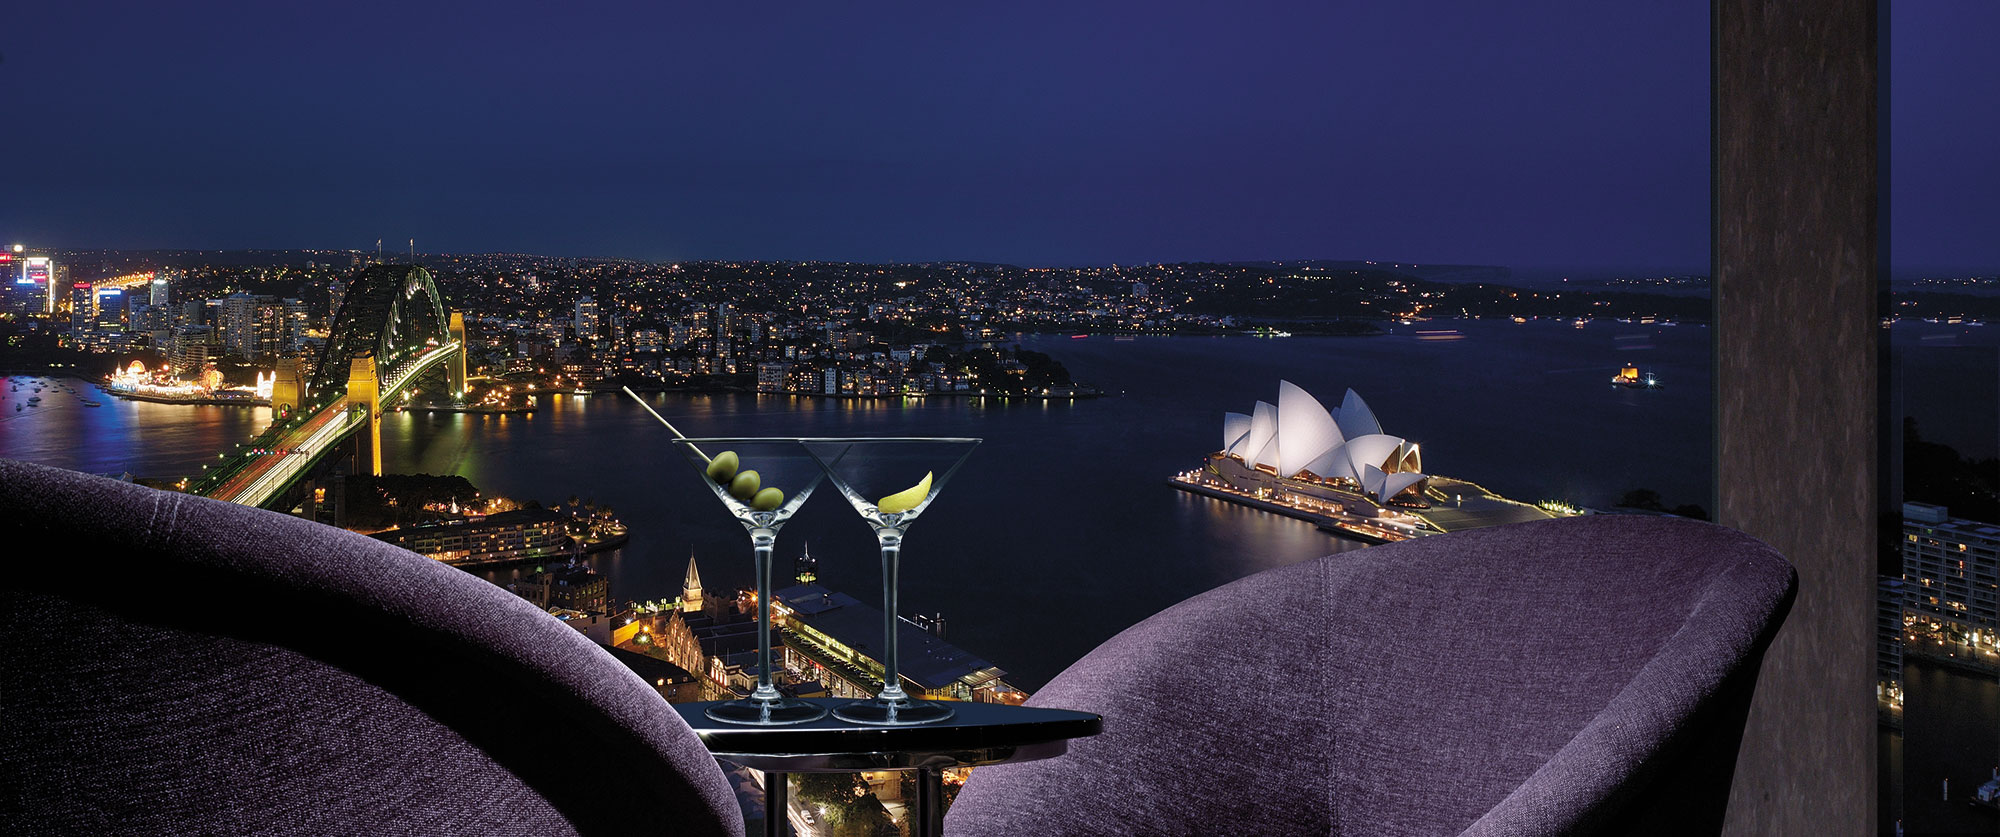 Best Sydney Hotel - Australia New Zealand - Vacation Package - 5 star - Australia New Zealand Highlights